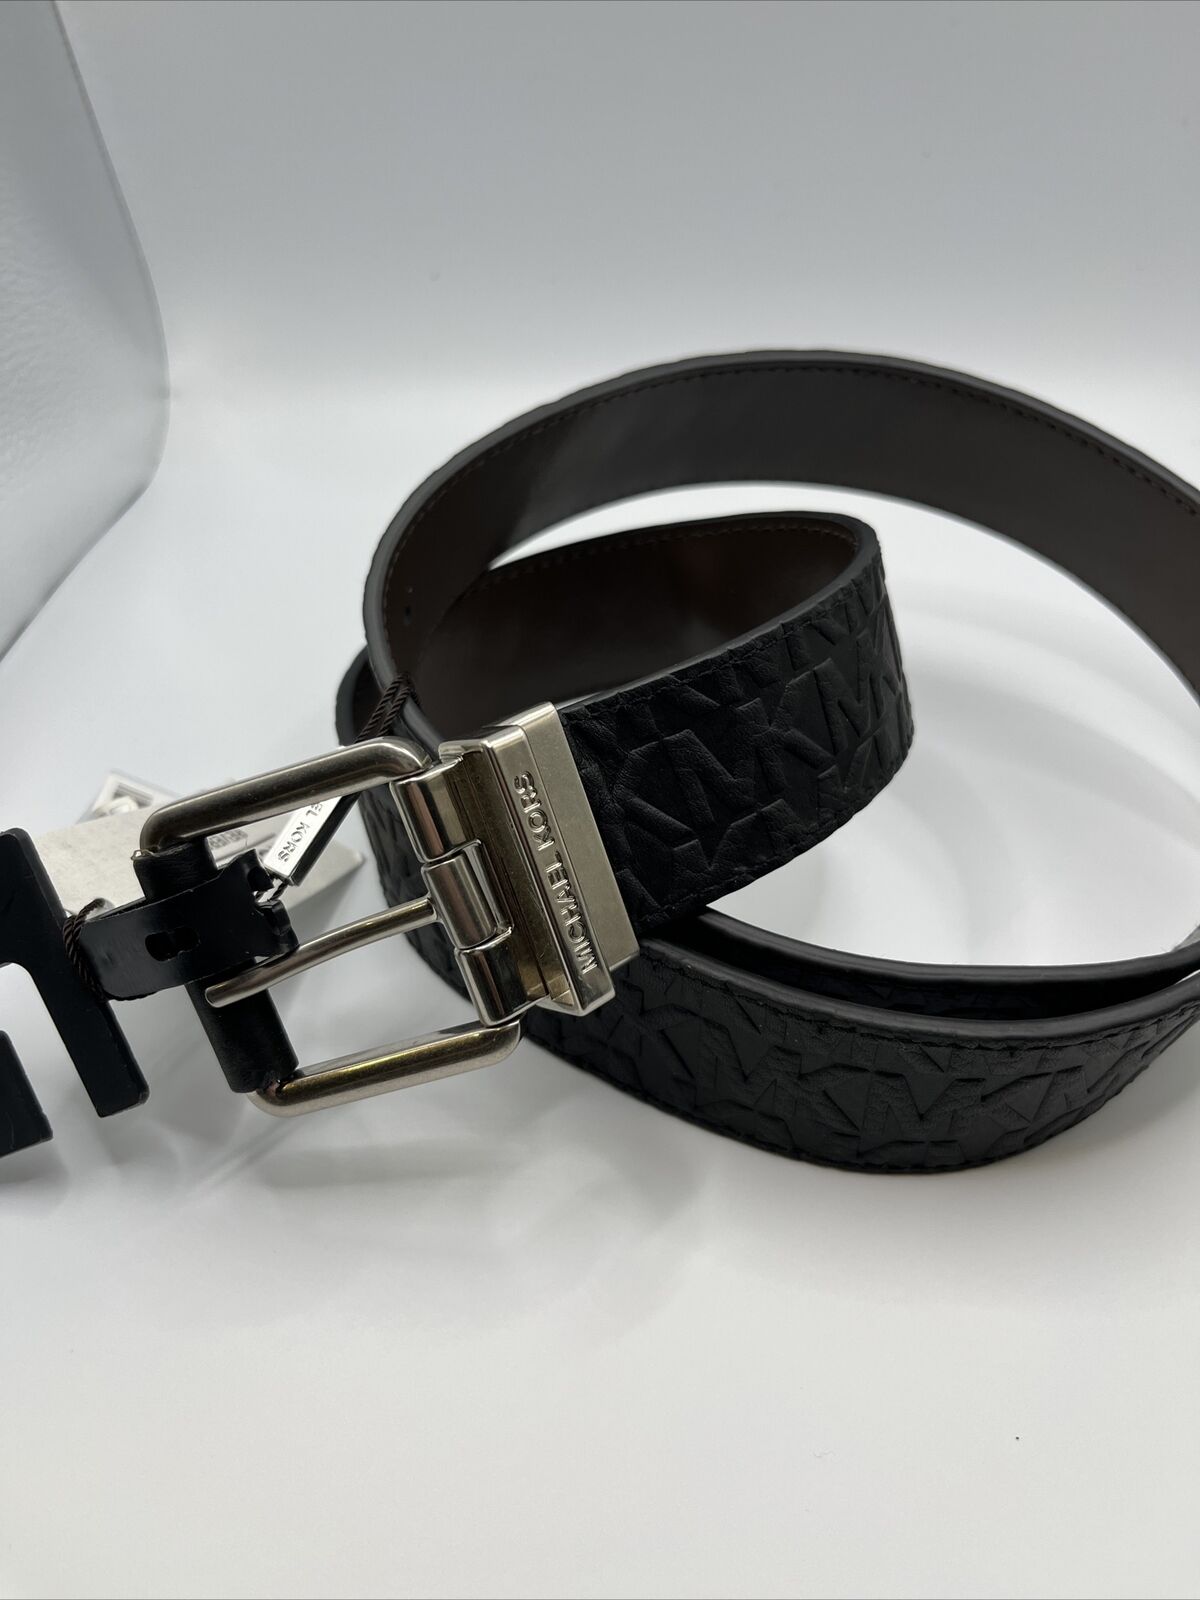 Michael Kors men's Embossed Leather Reversible Belt - size 32 - Black / Brown